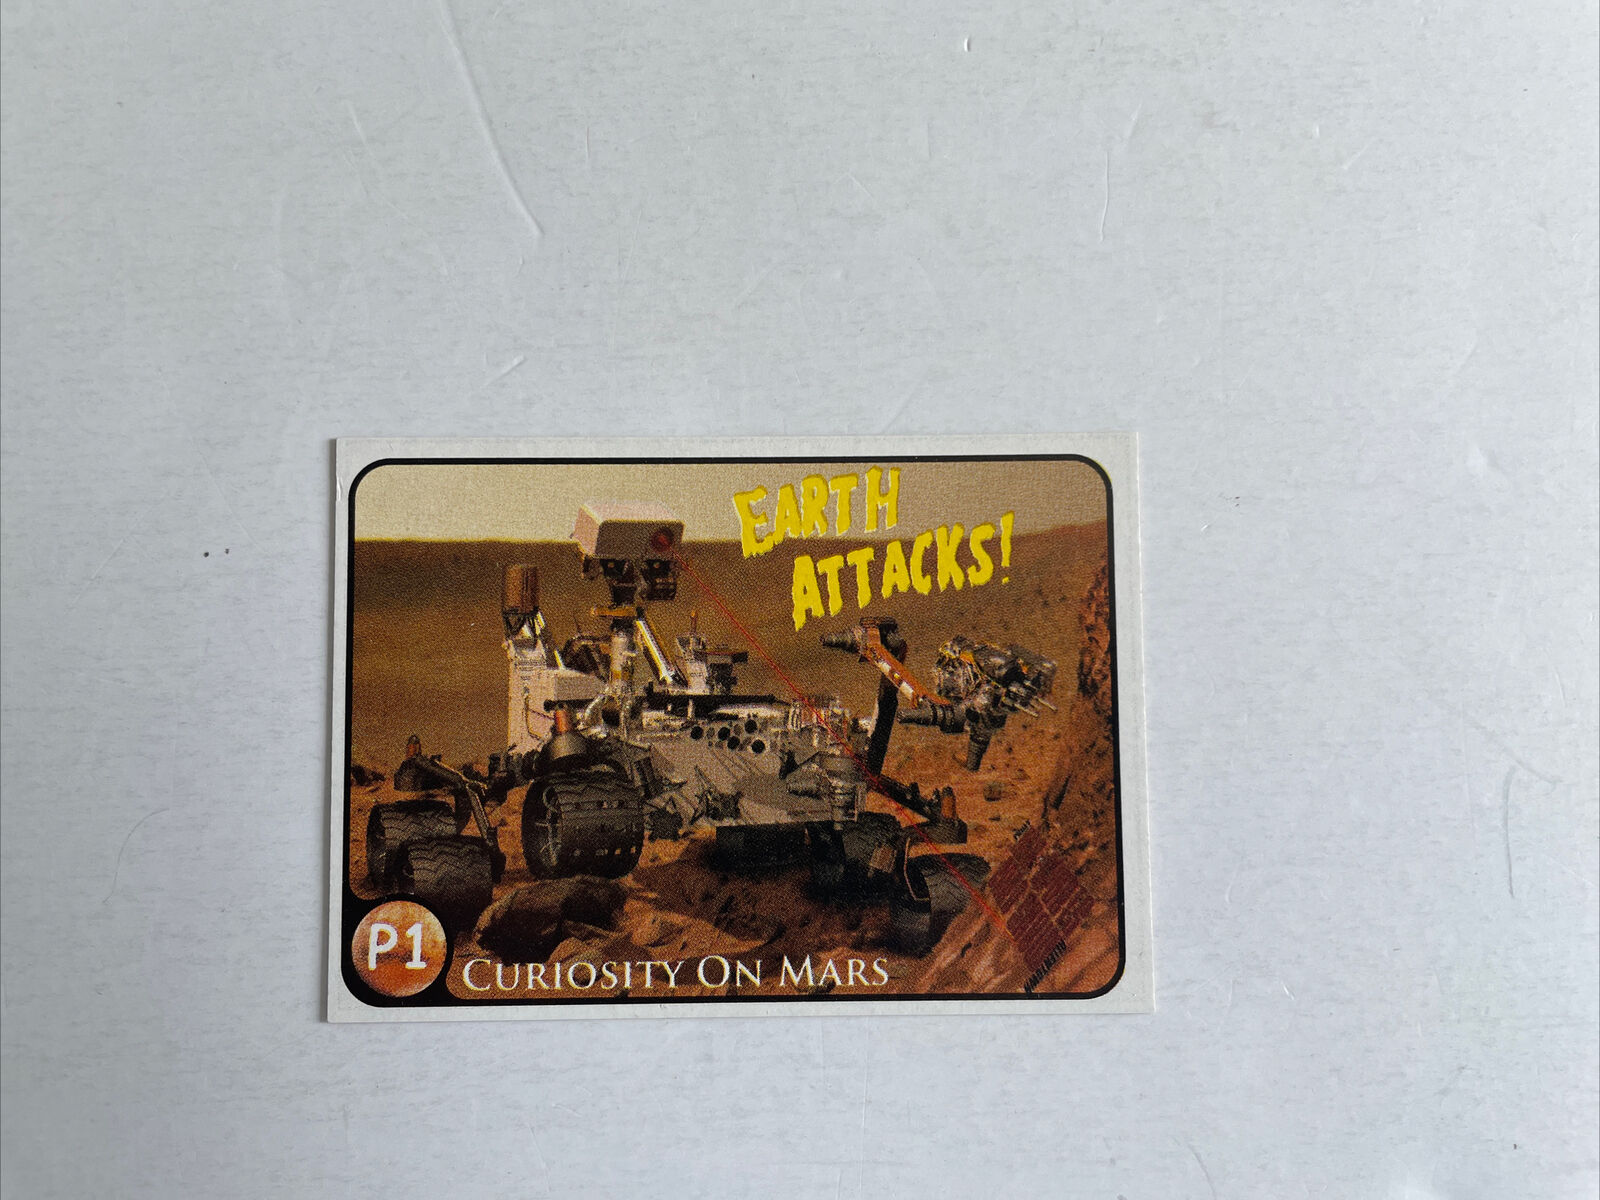 PROMO CARD-CURIOSITY LANDS ON MARS (Sidekick 2012) #P1 EARTH ATTACKS